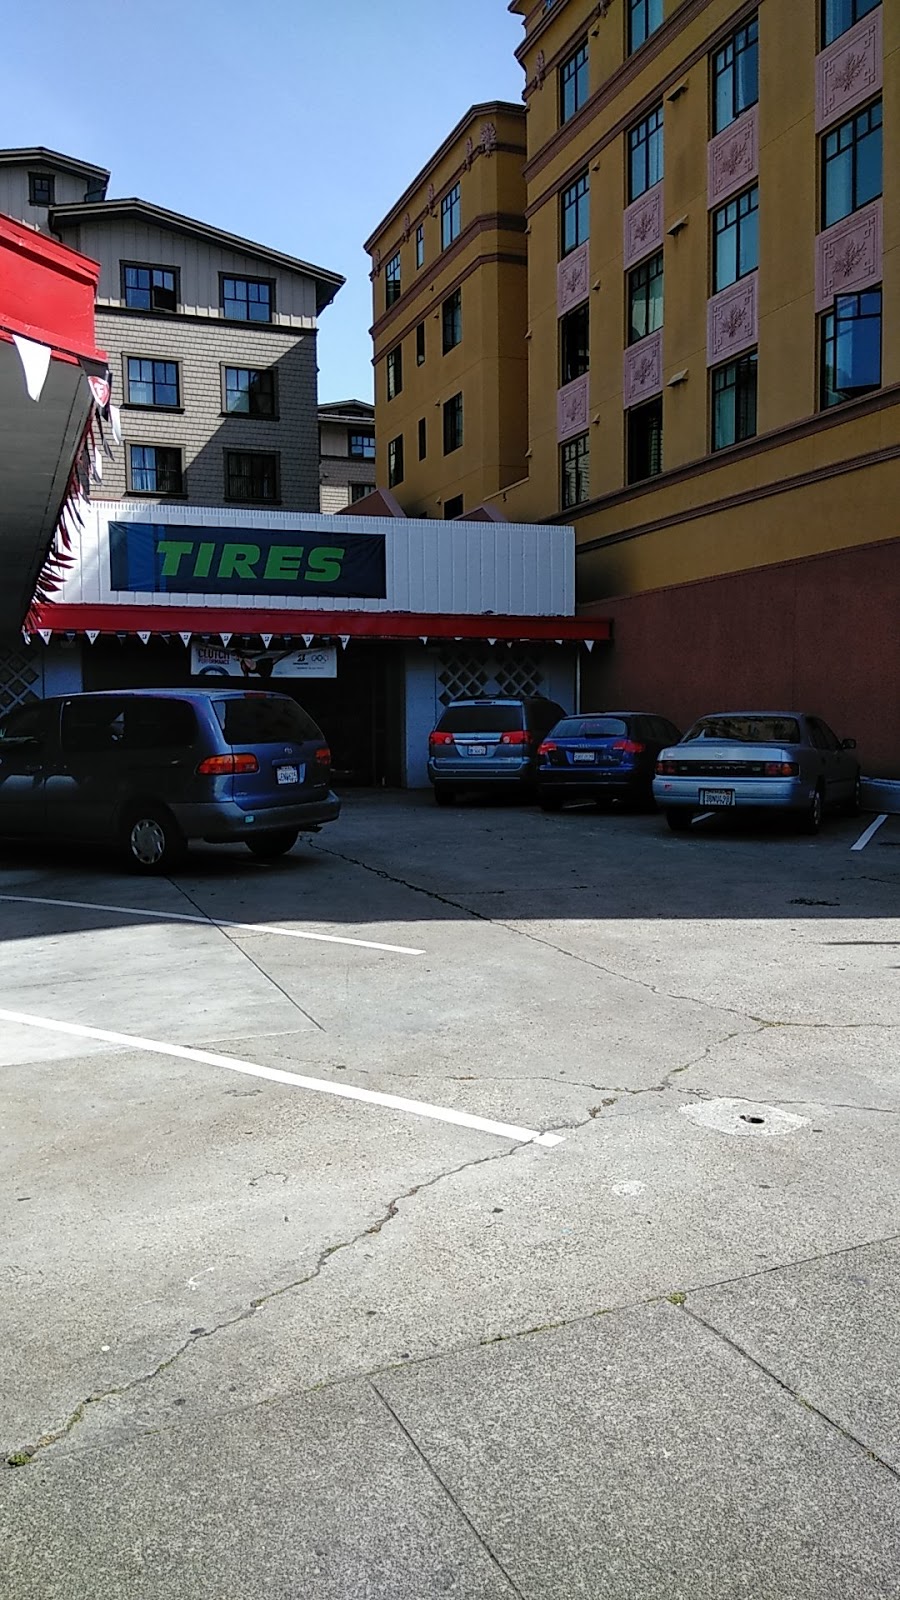 Joes Tires | 1865 University Ave, Berkeley, CA 94703 | Phone: (510) 841-9406